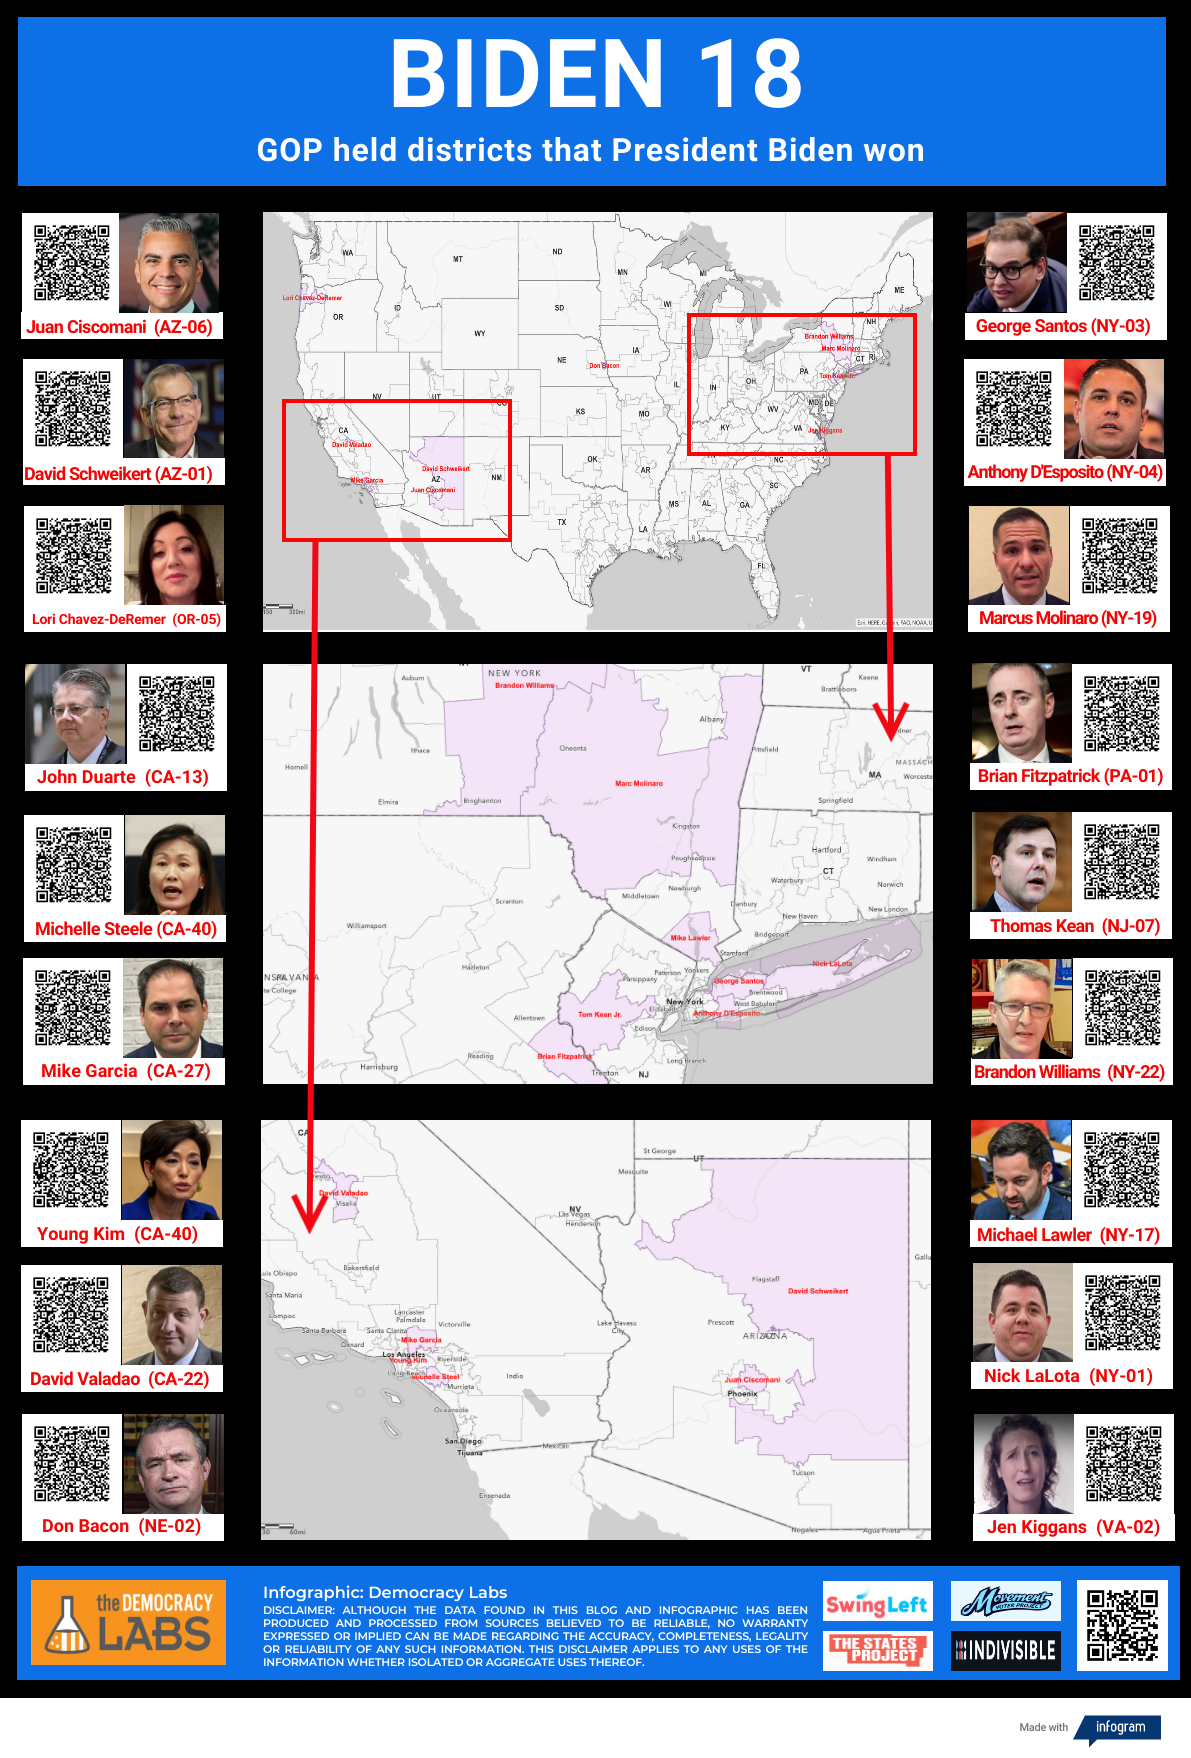 Biden 18 maps the path to victory through GOP-held districts that President Biden won